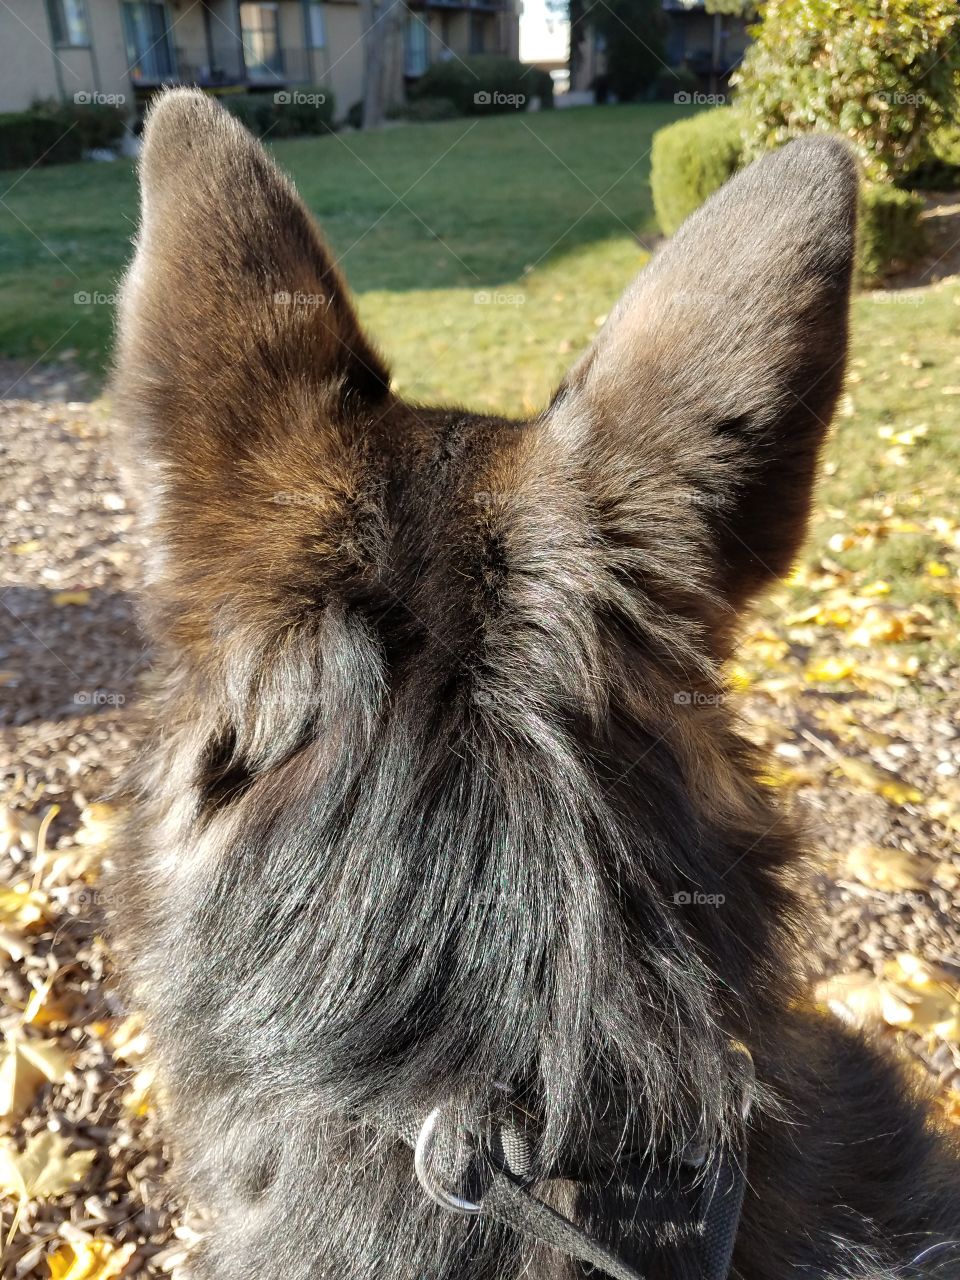 behind the dog ears